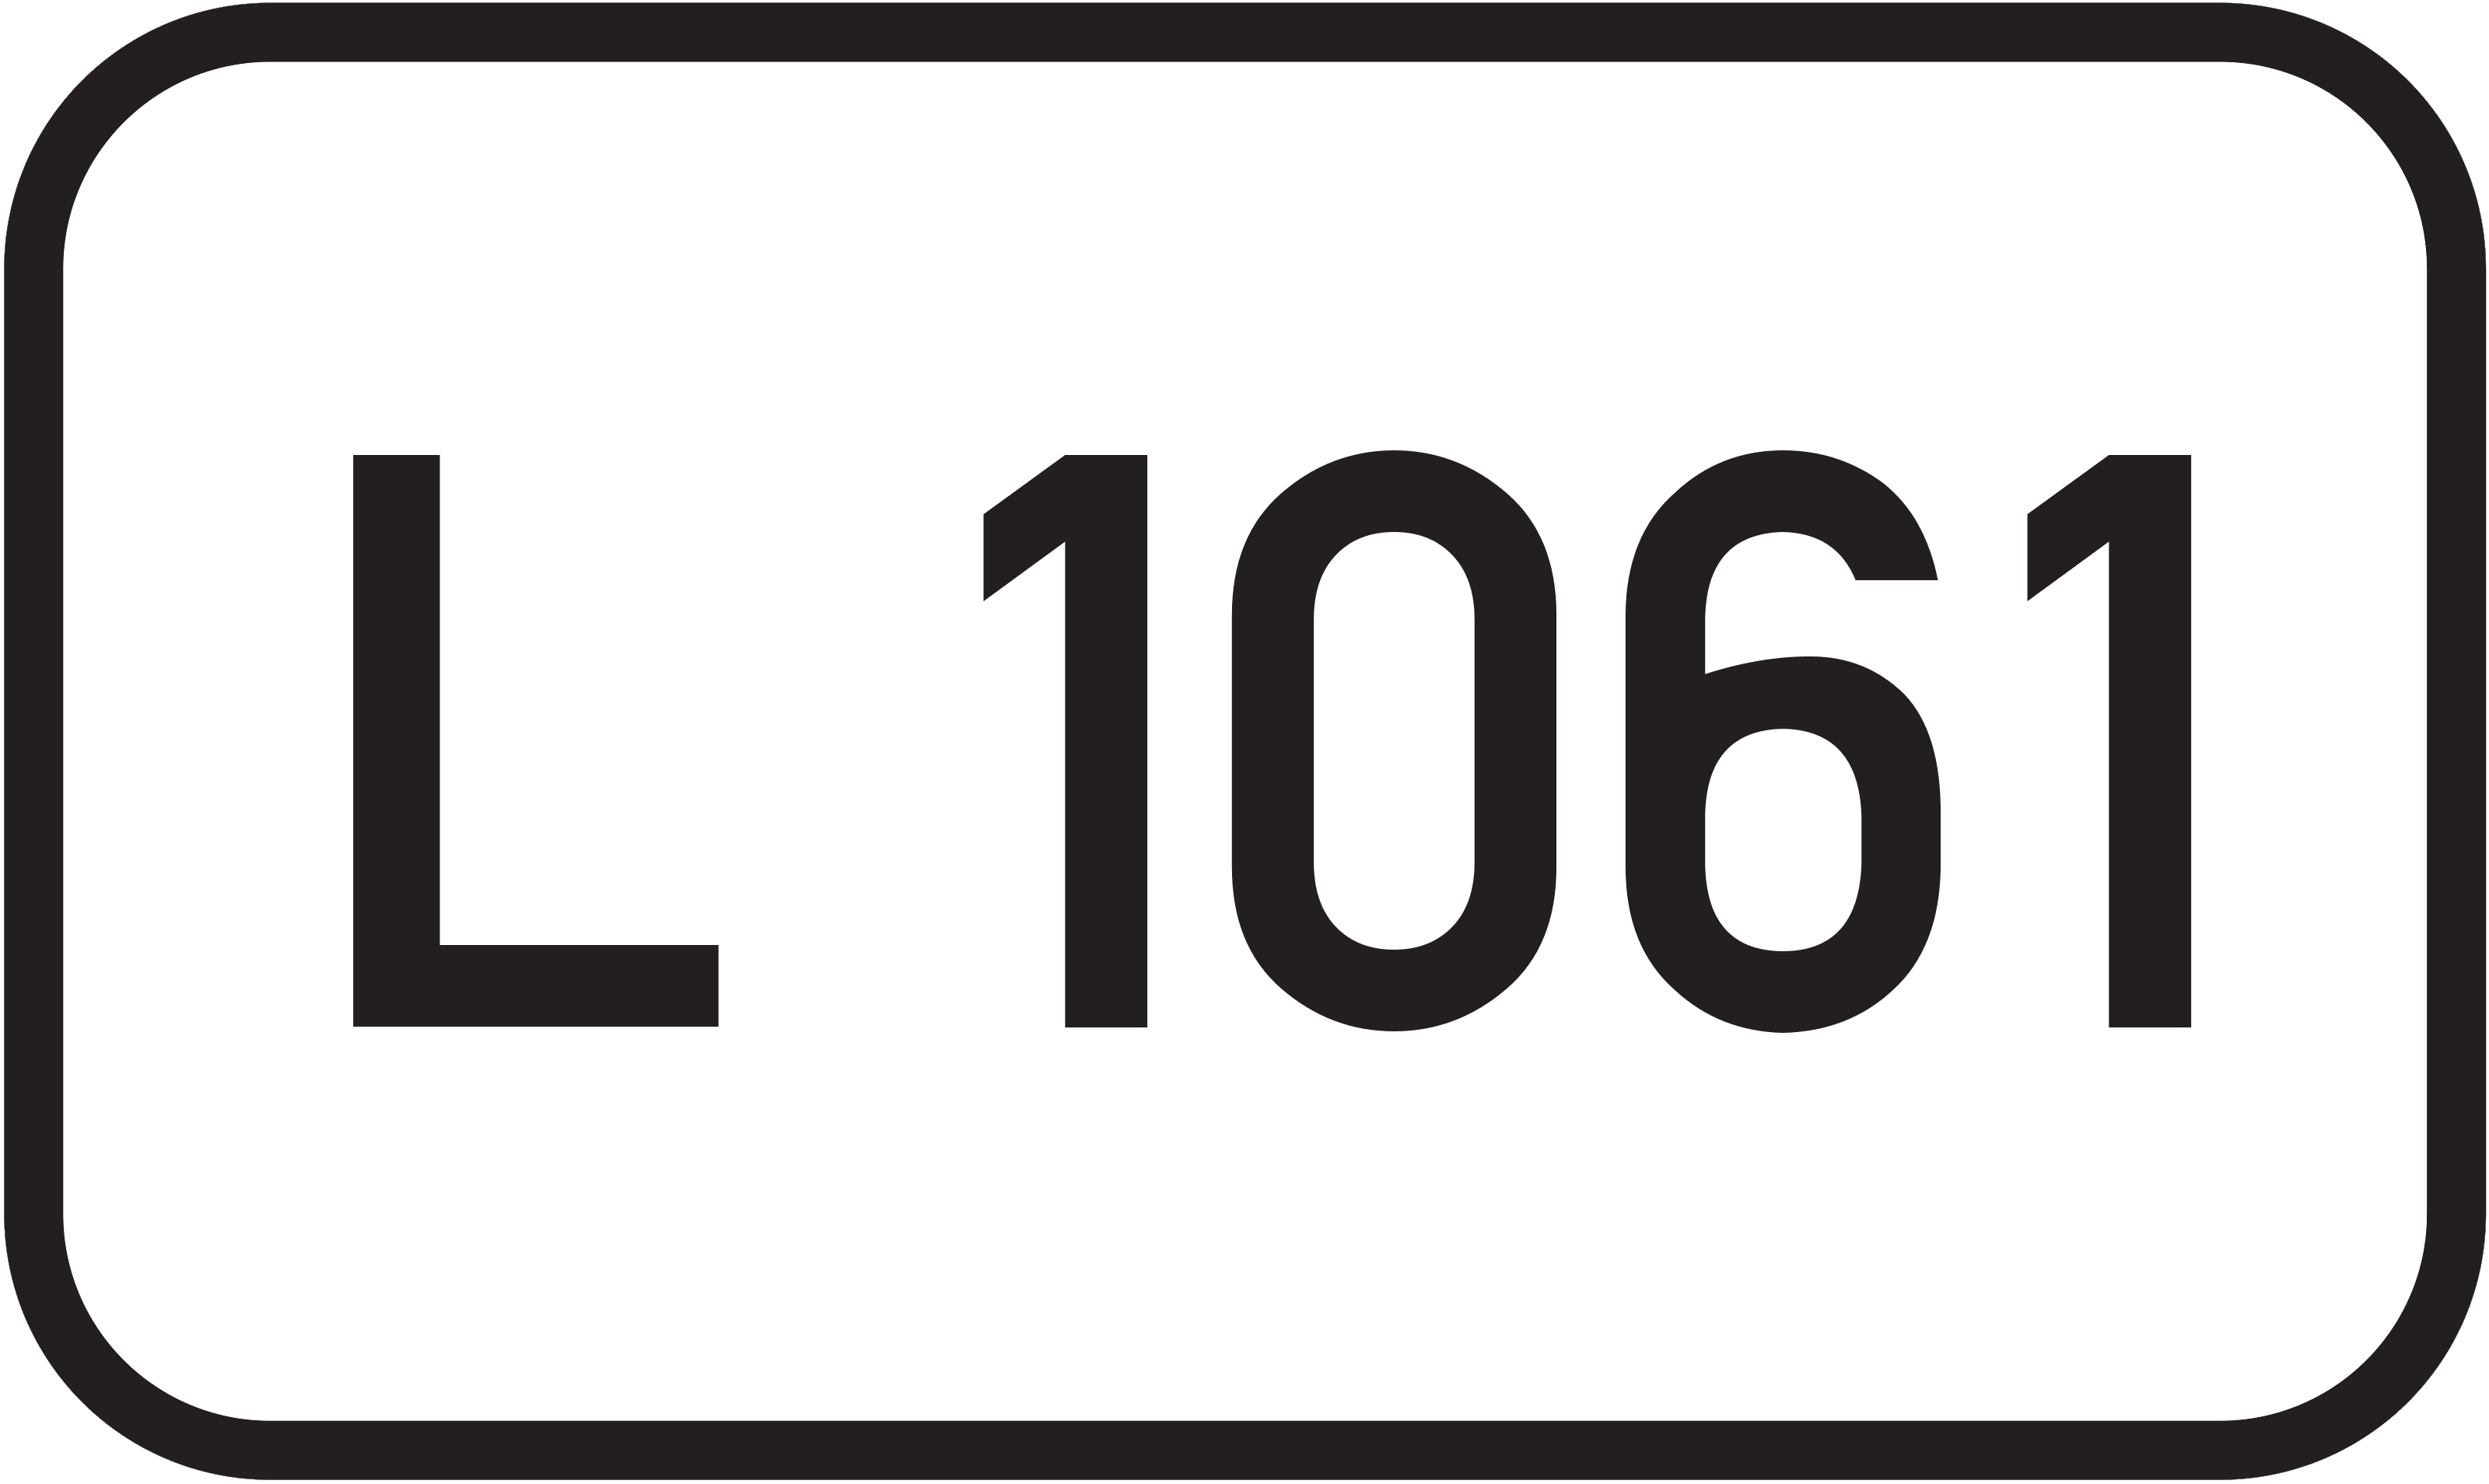 Straßenschild Landesstraße L 1061